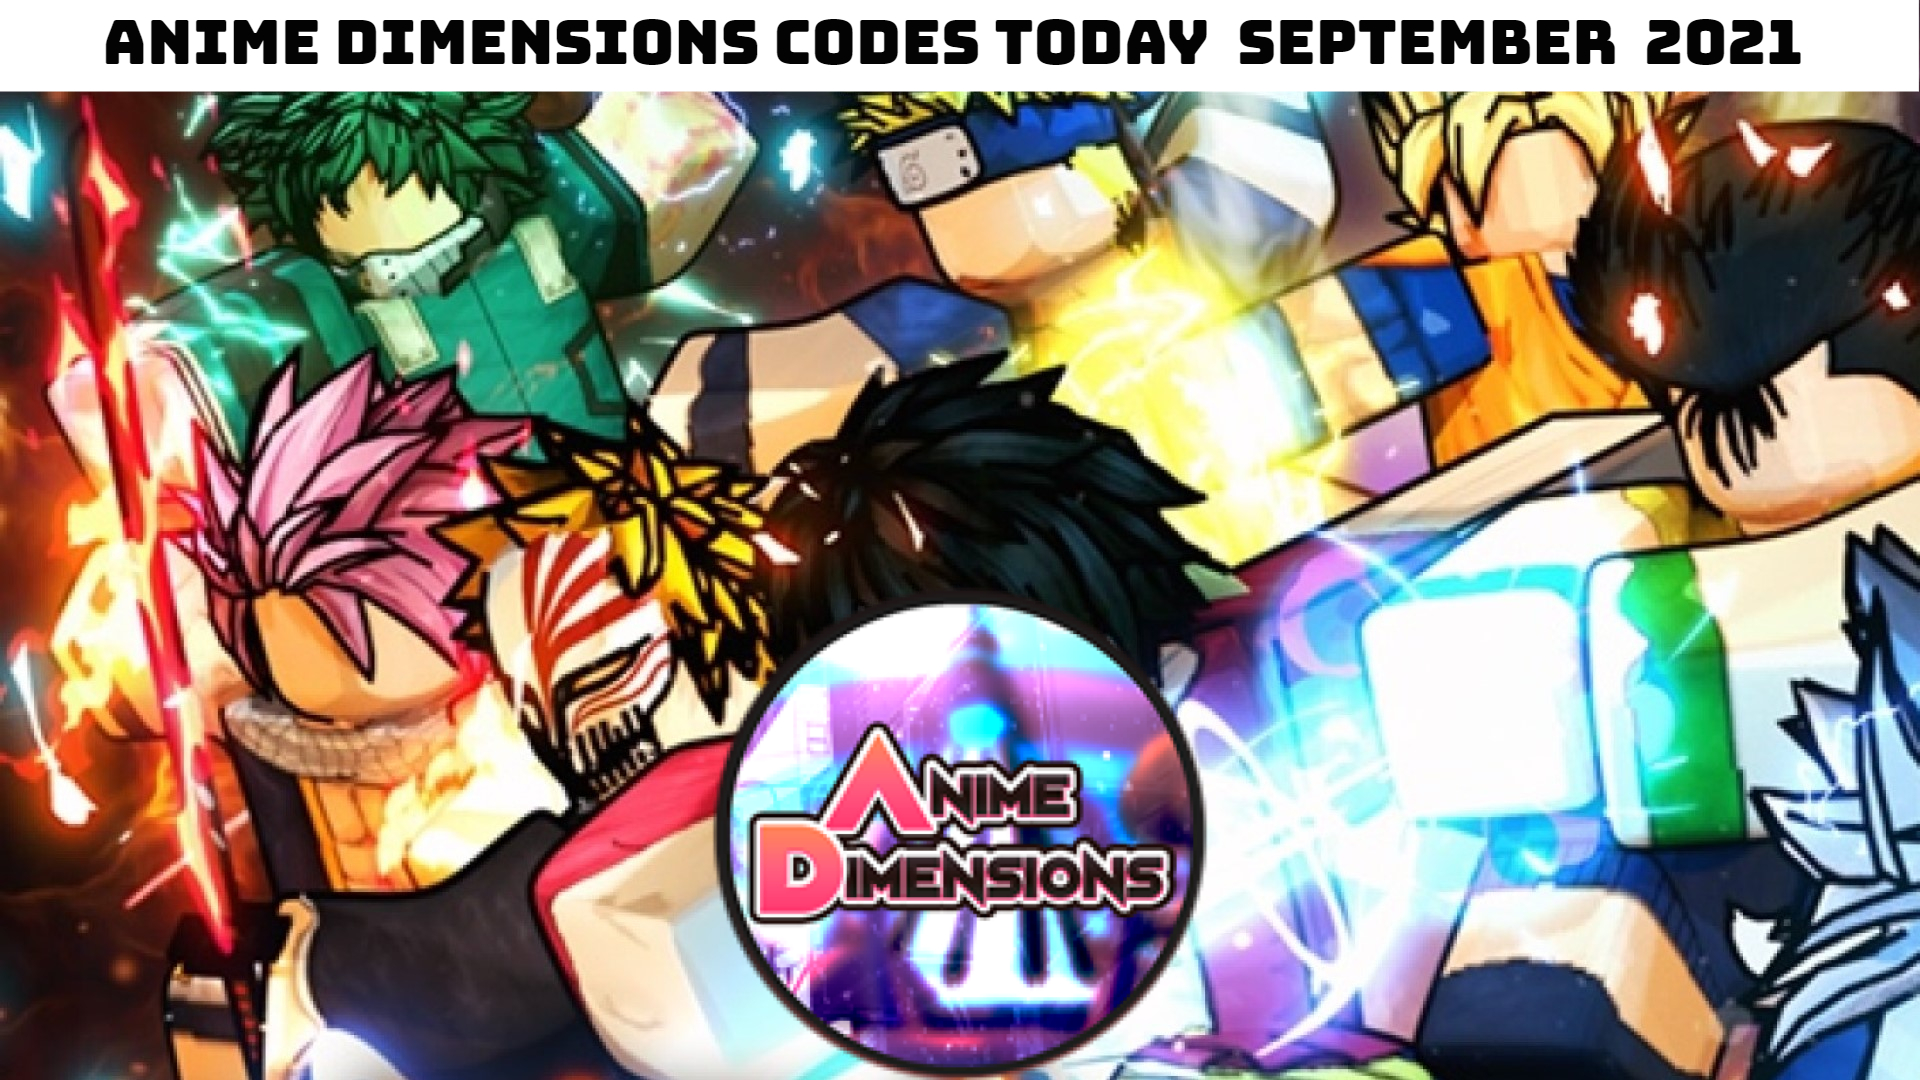 Anime dimension codes